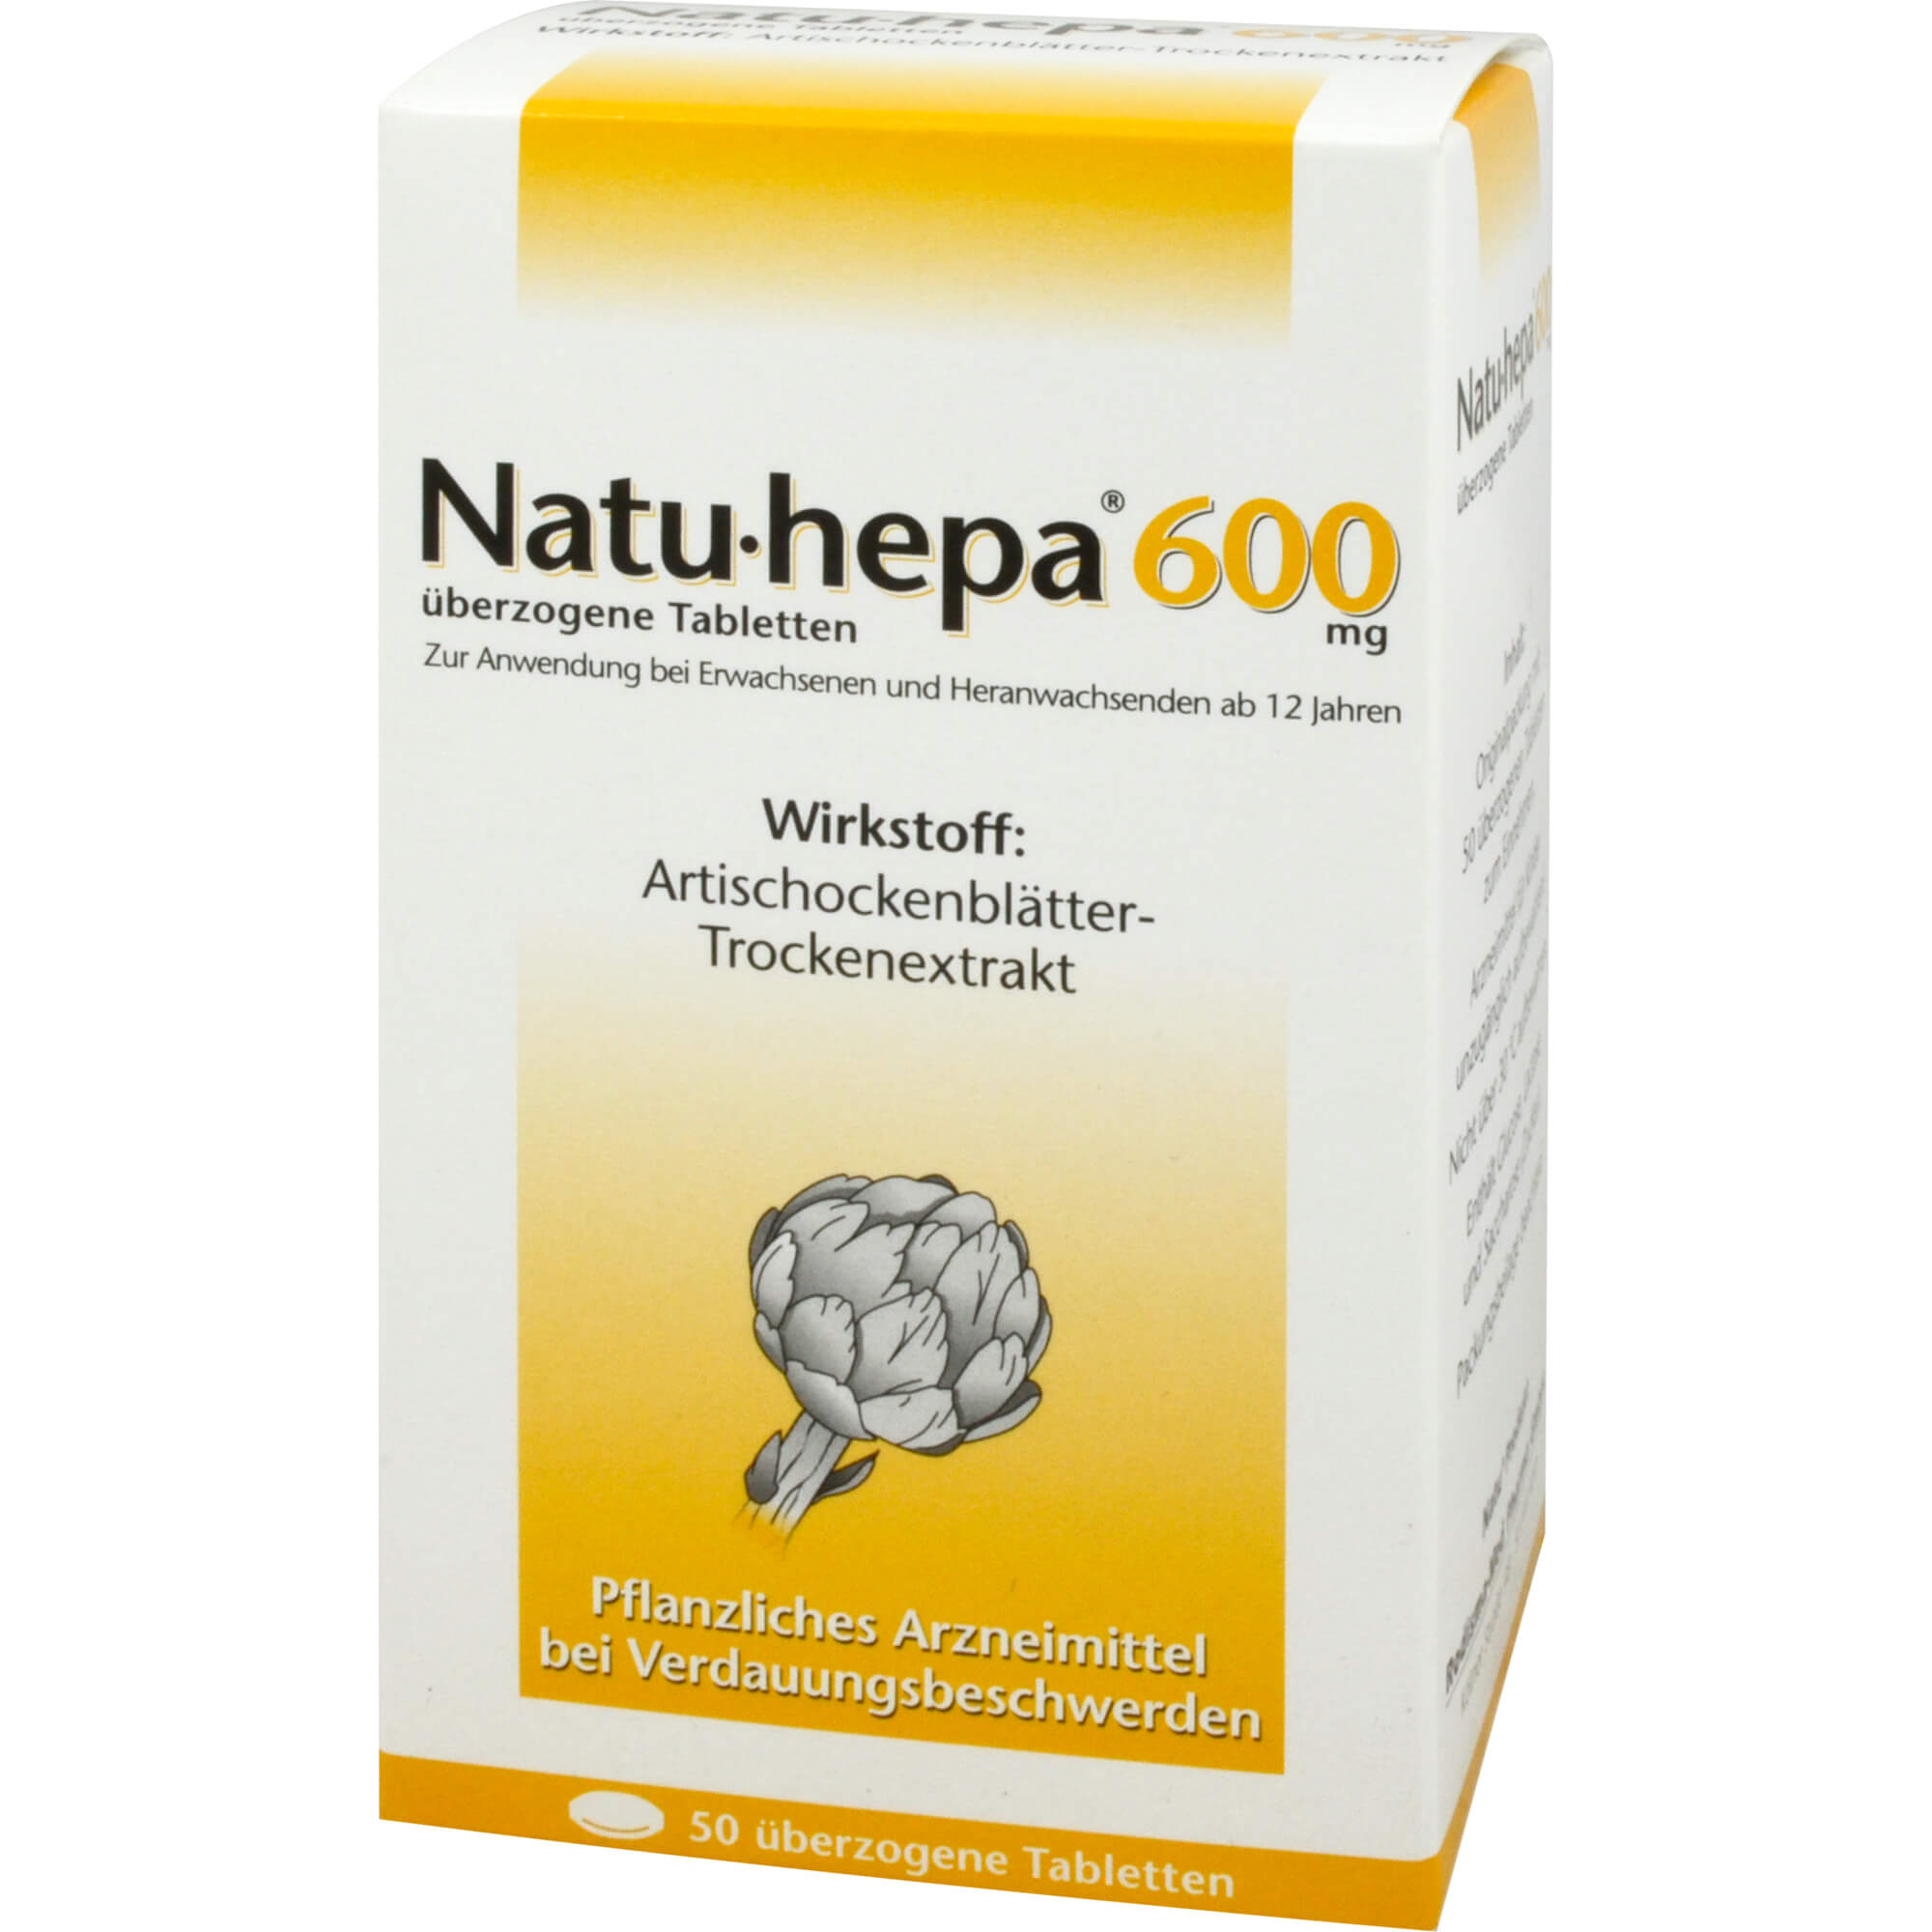 NATU HEPA 600 mg ueberzogene Tabl.